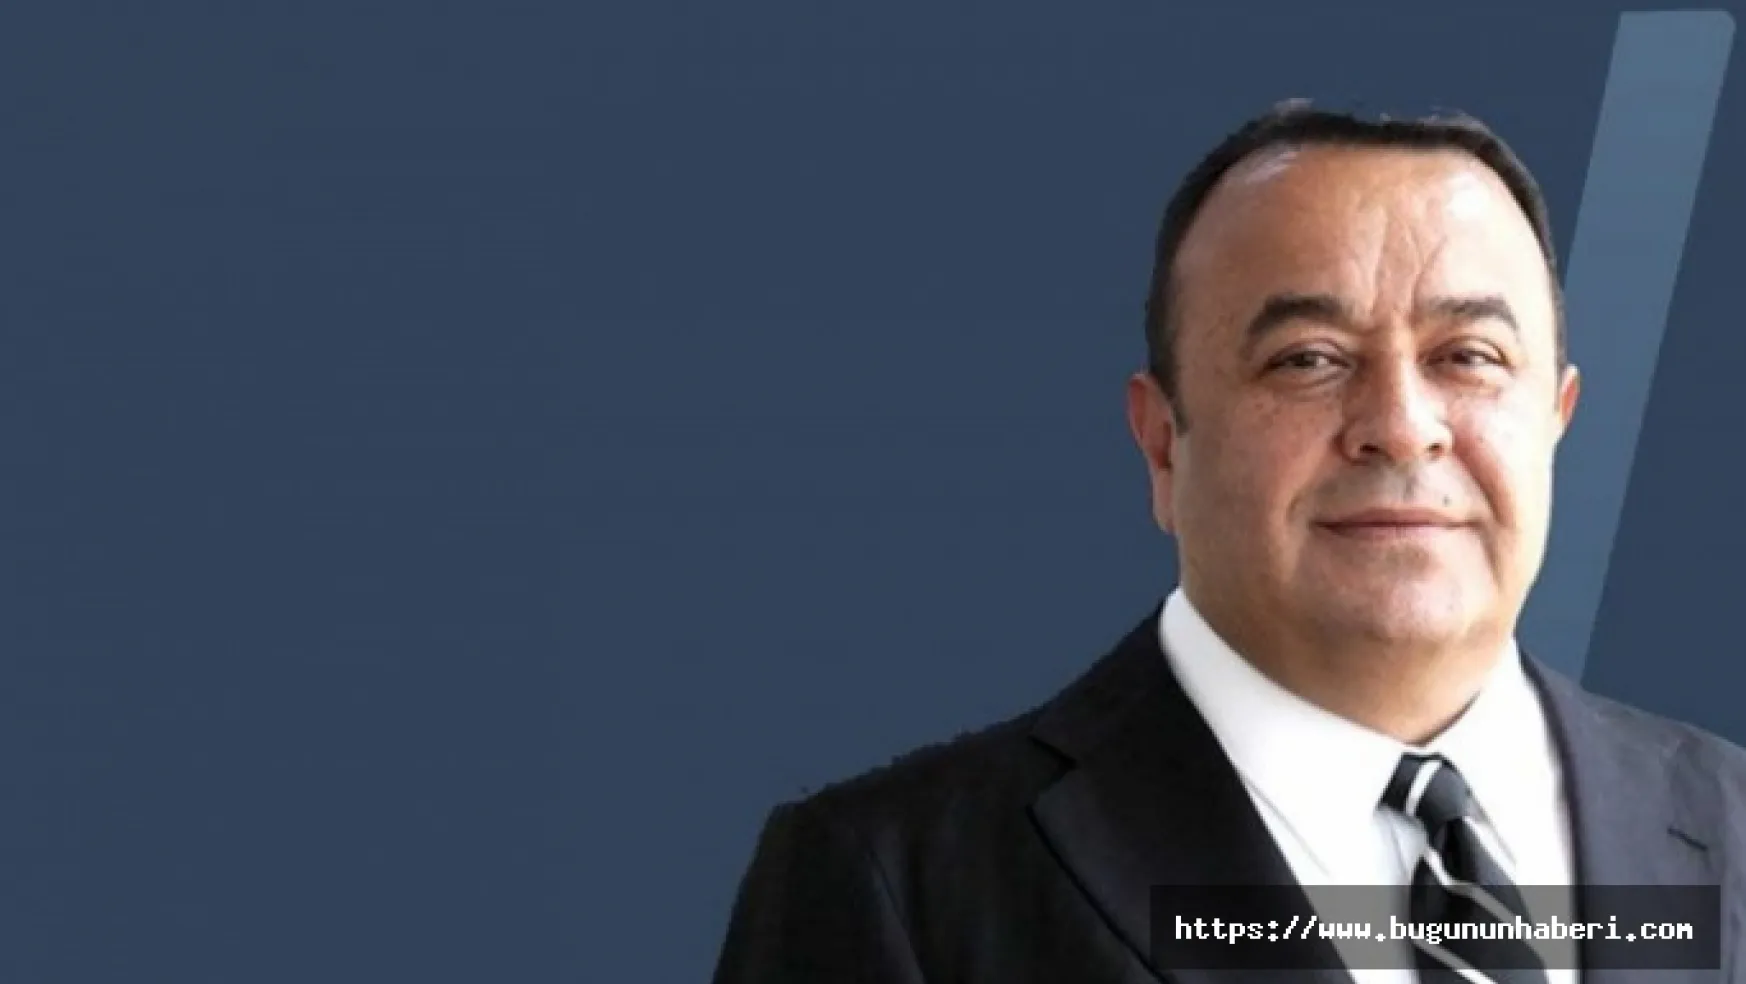 İYİ Parti Ankara Milletvekili Adnan Beker kimdir, neden istifa etti?